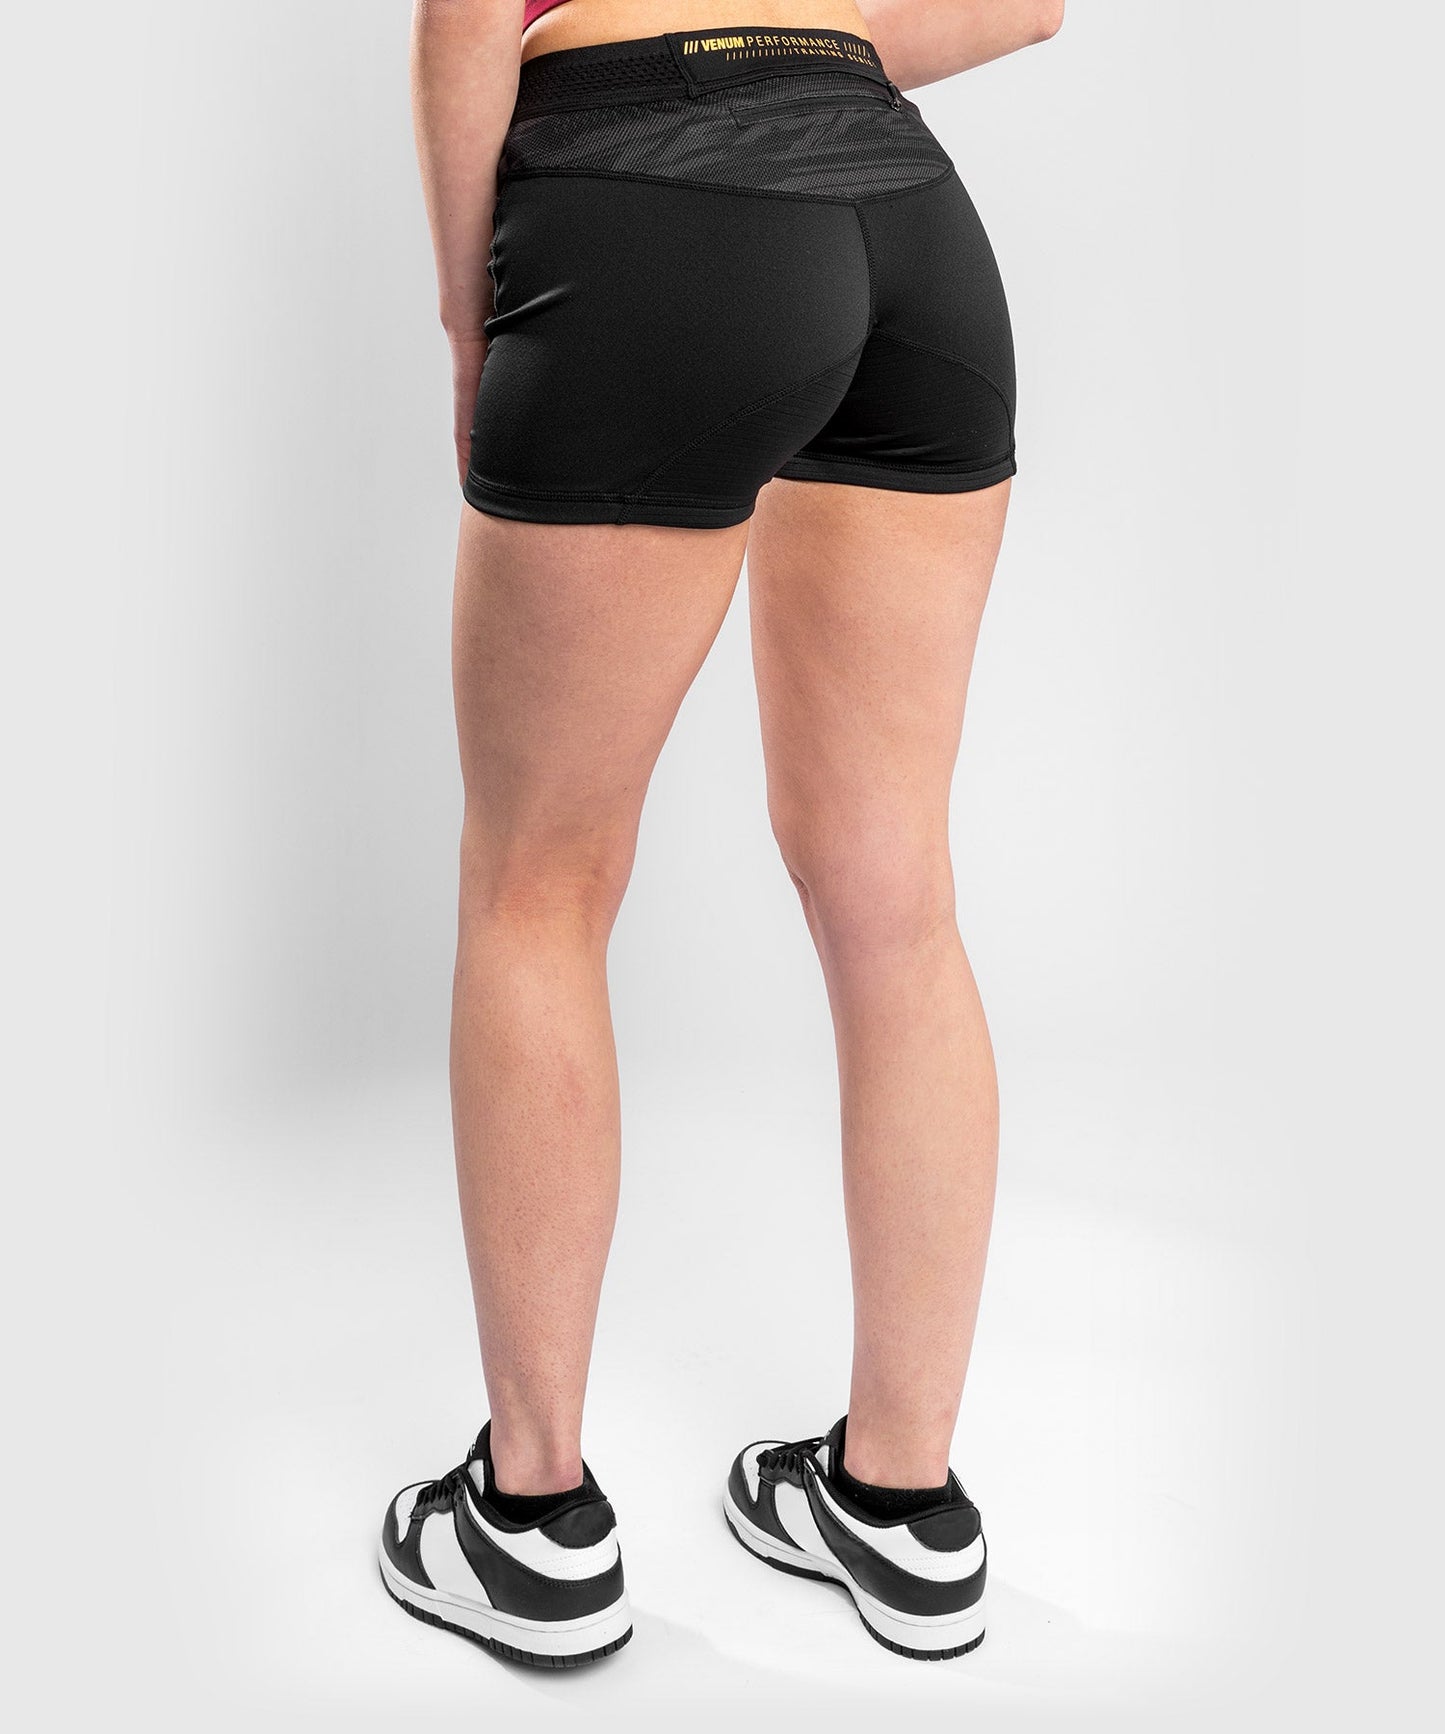 Venum Tempest 2.0 Compression Shorts - For Women - Black/Grey